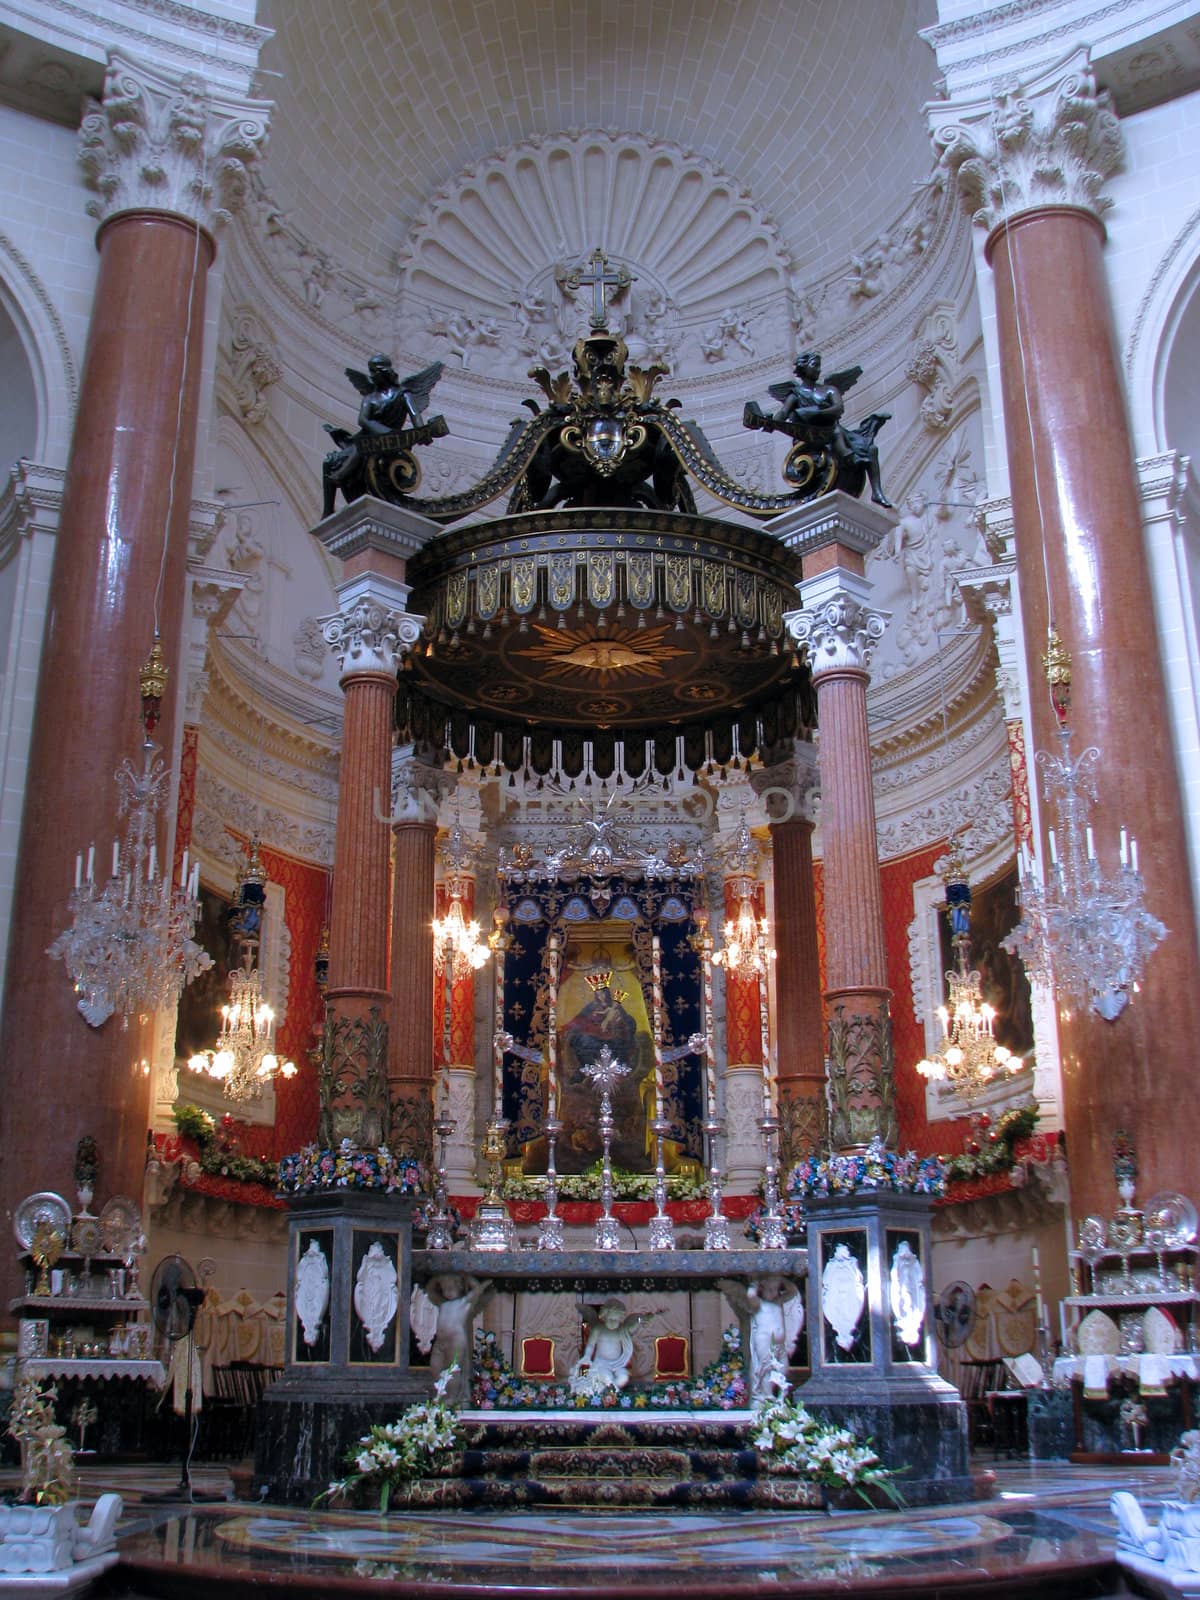 The Main Altar by fajjenzu